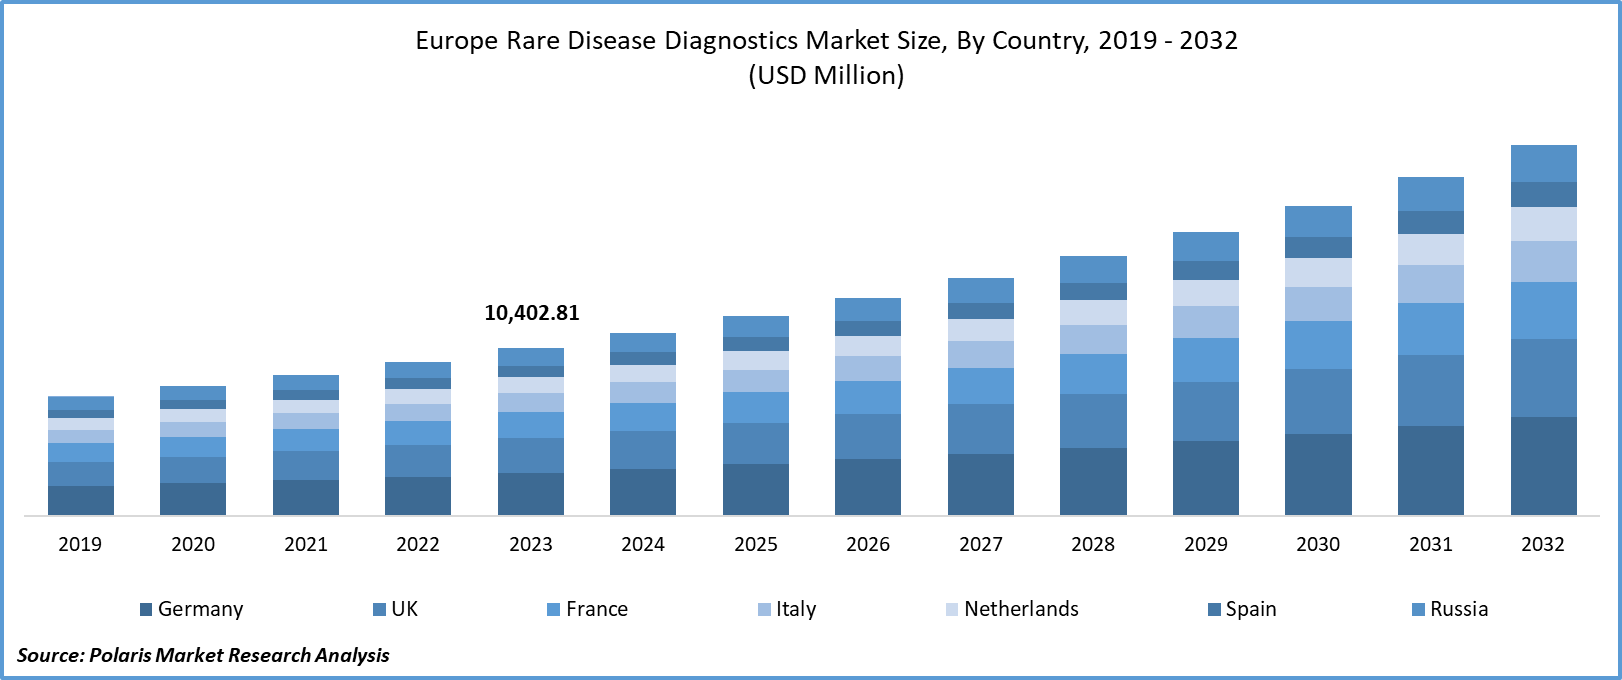 Europe Rare Disease Diagnostics Market Size